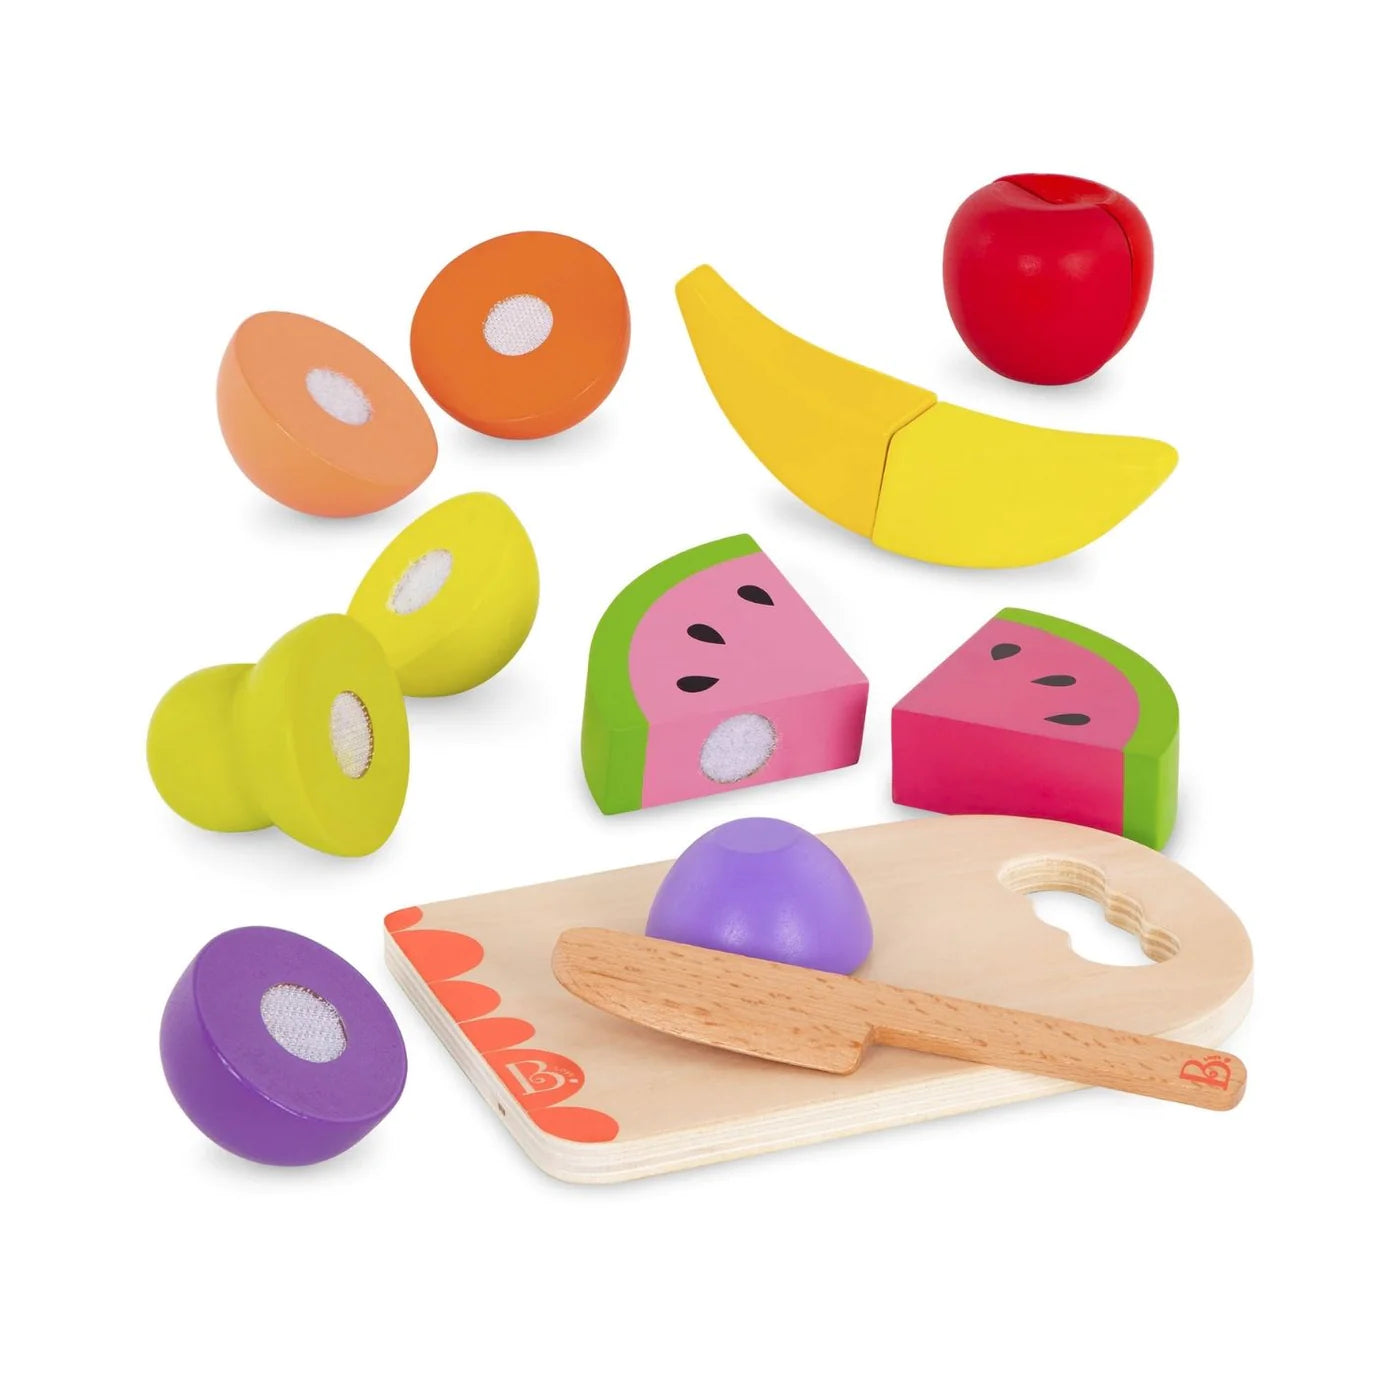 Chop ‘n’ Play - Fruits Wooden Play Set